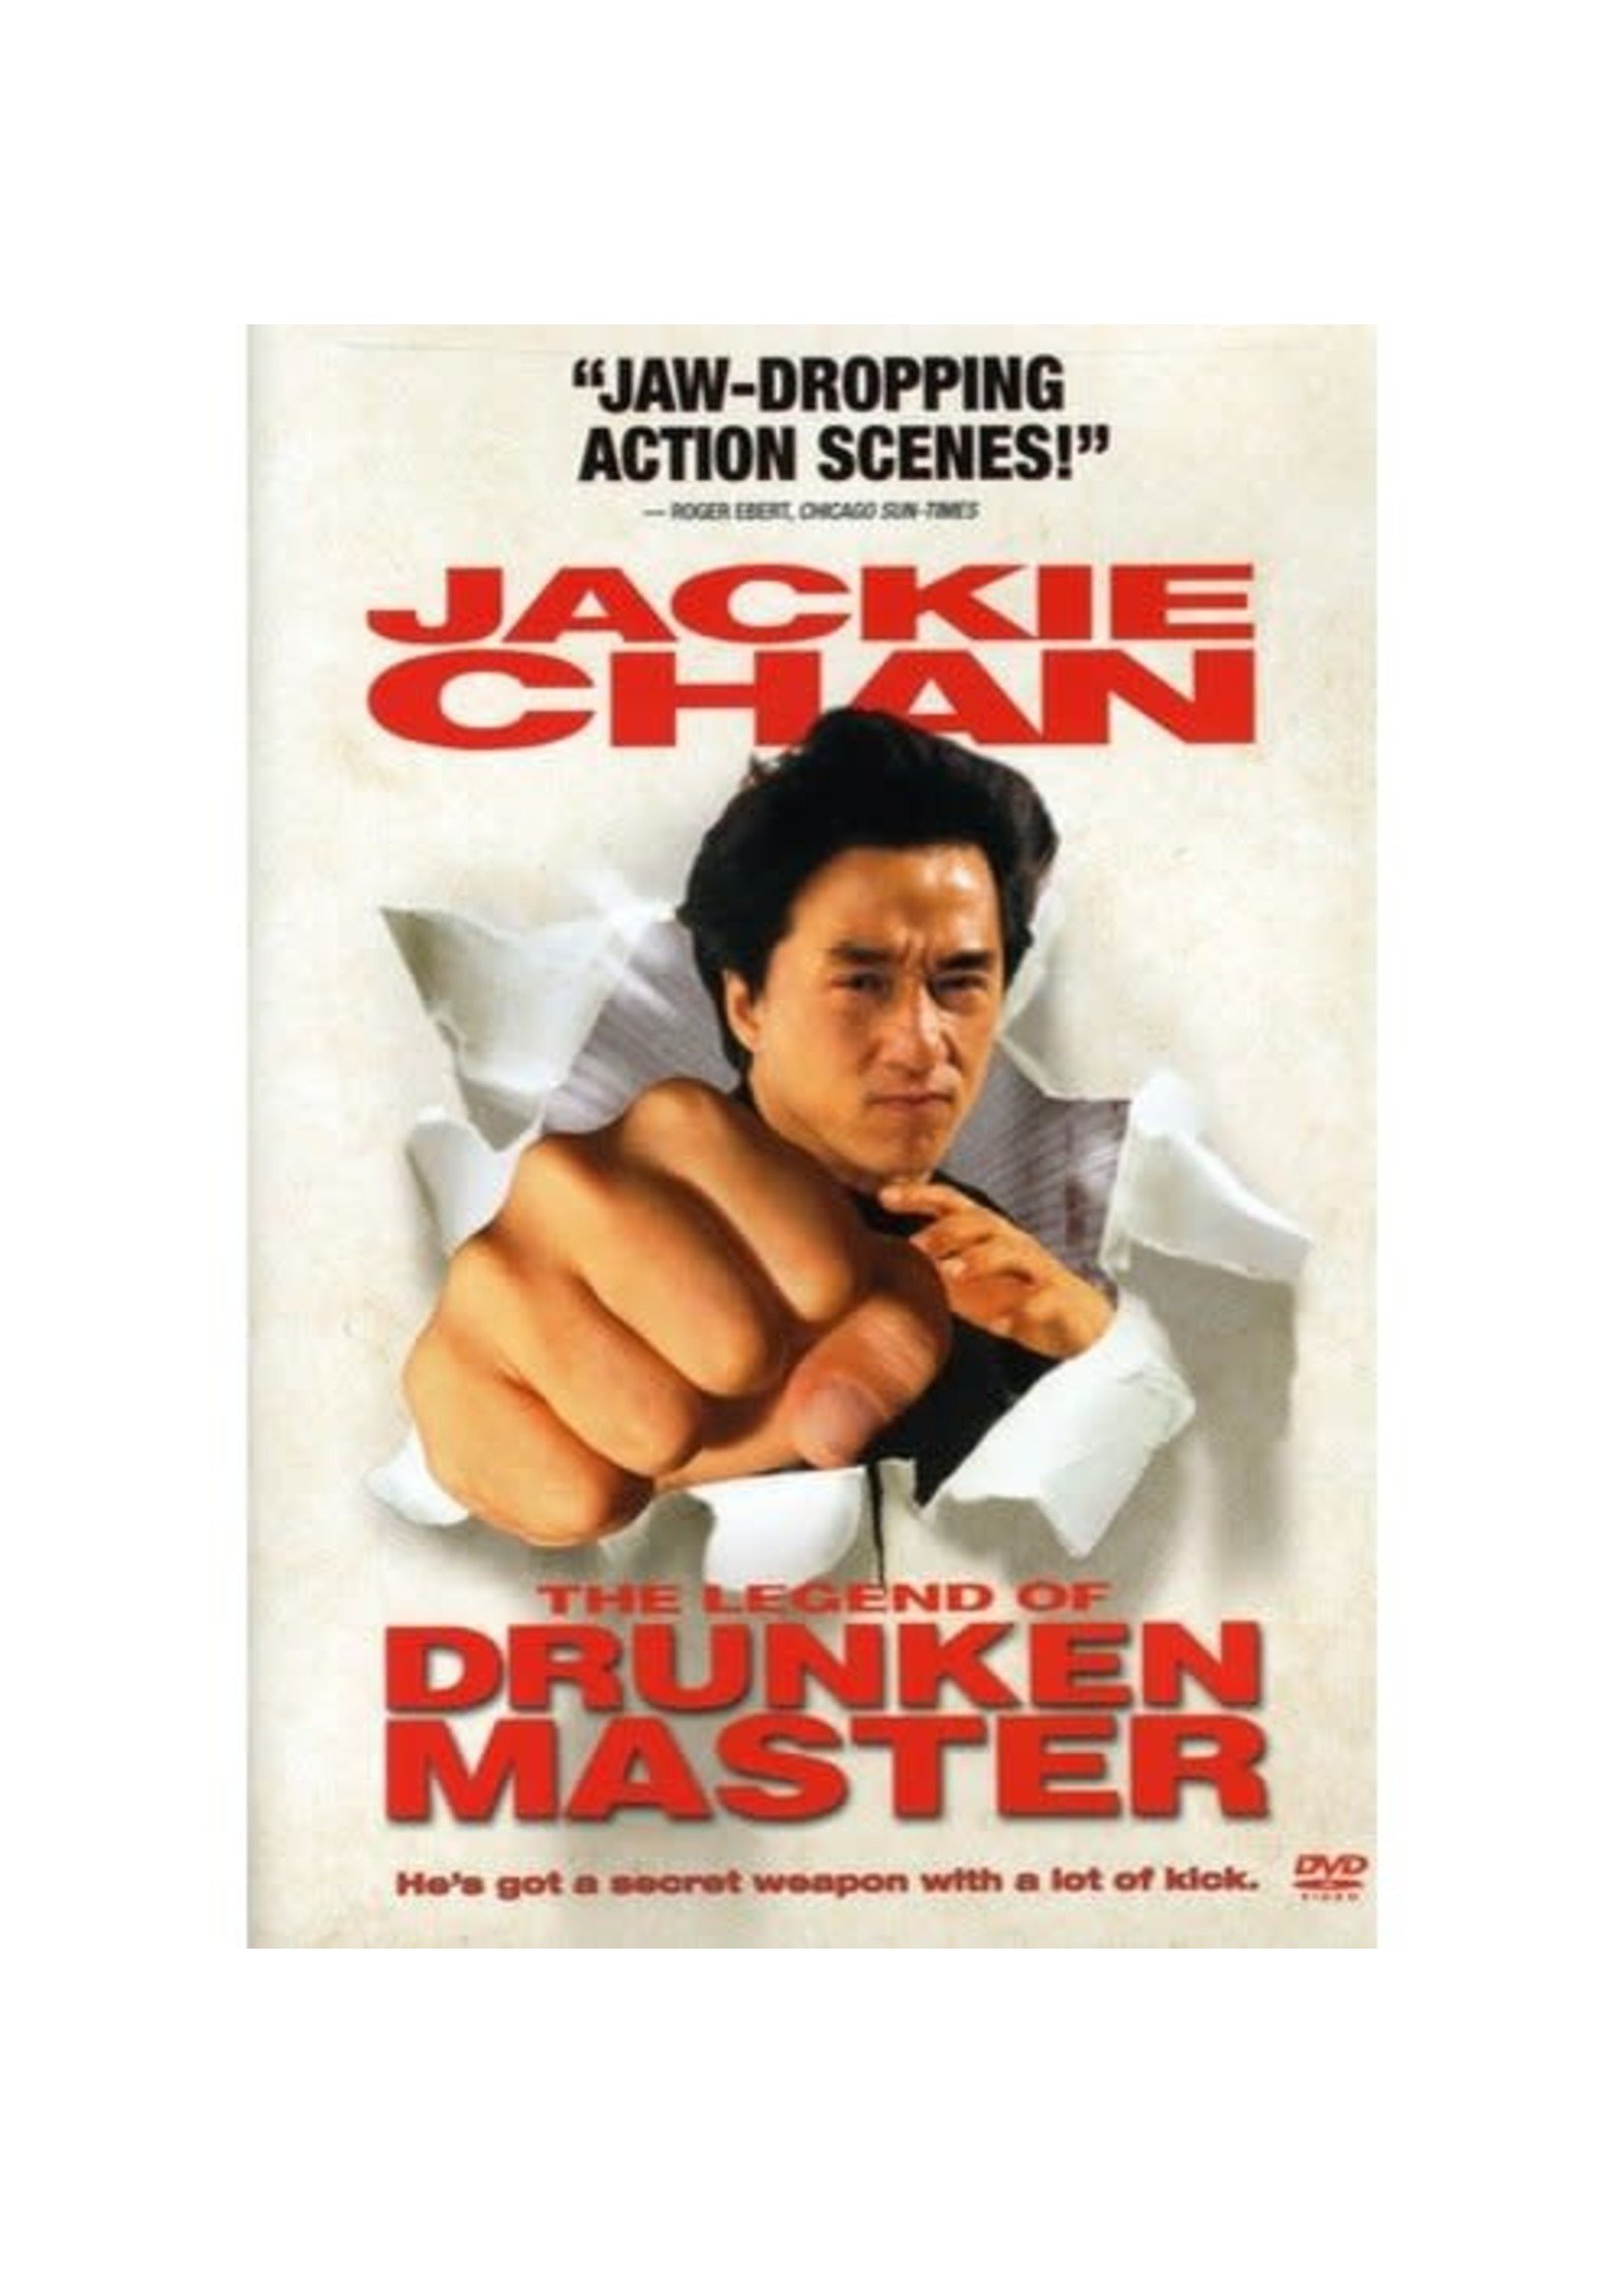 The Legend of Drunken Master DVD